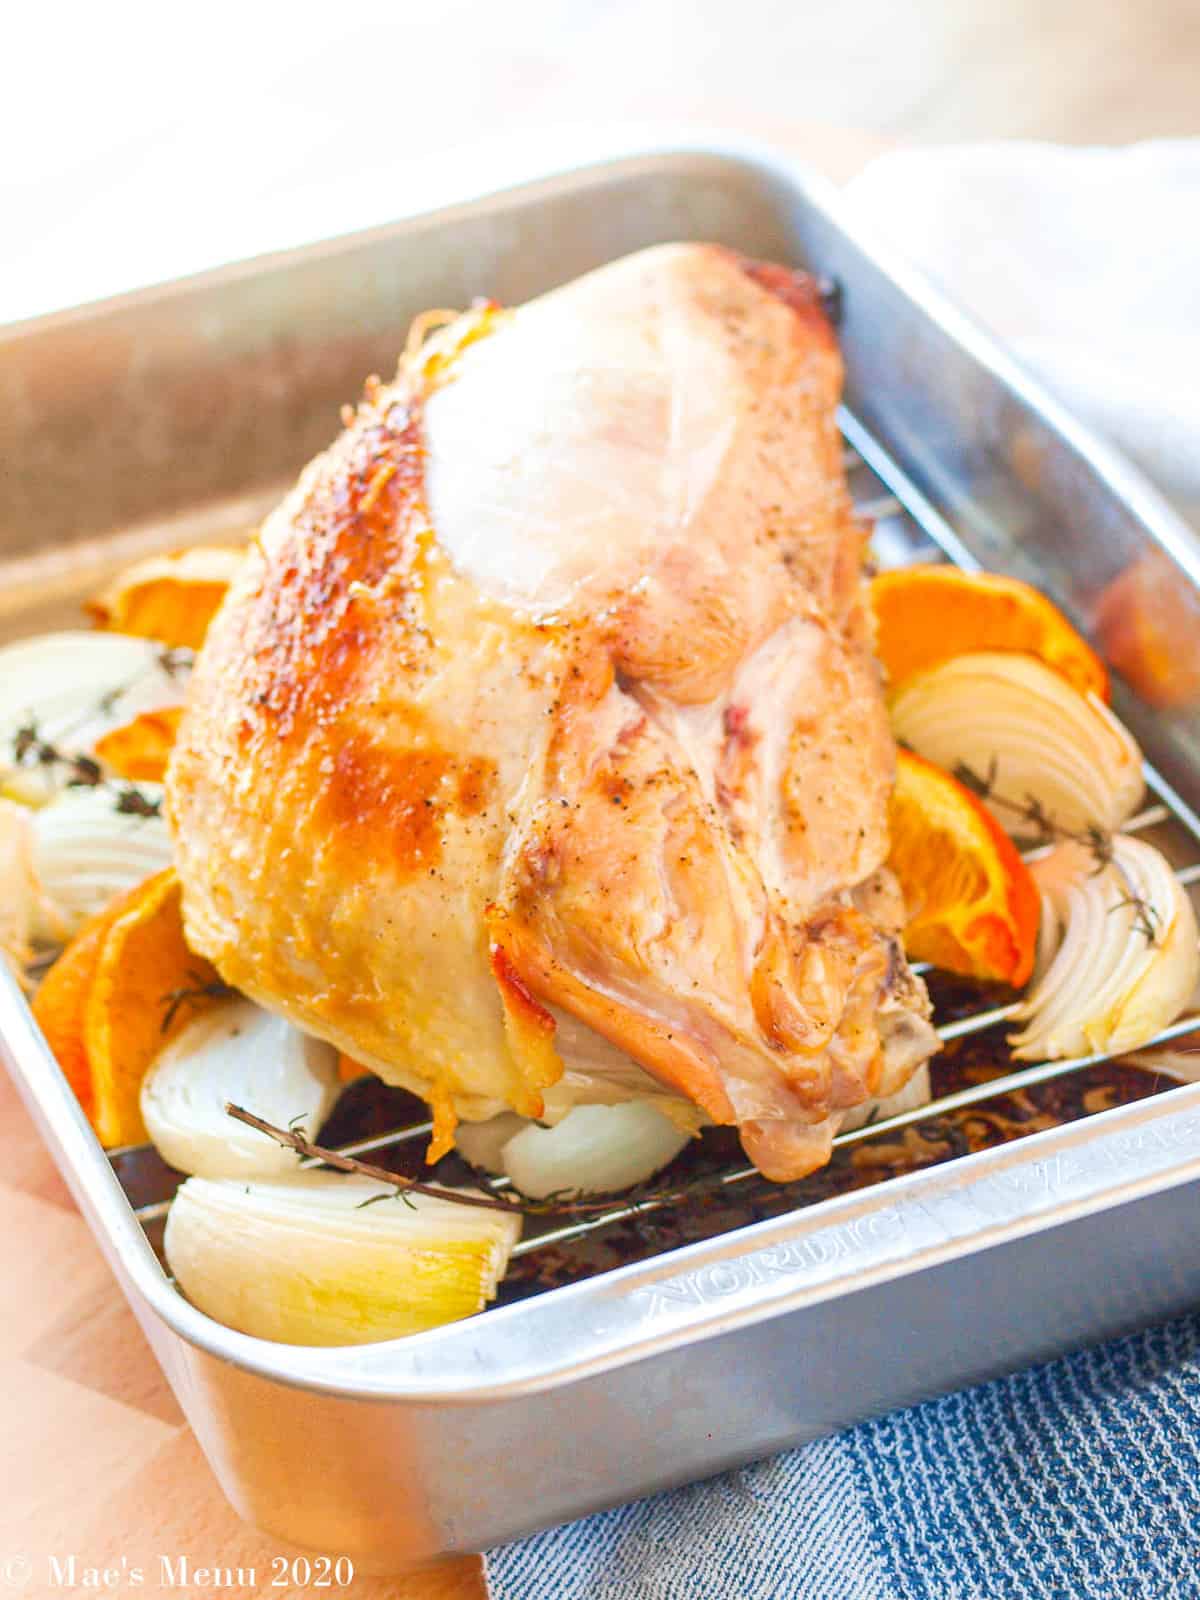 A turkey breast in a roasting pan.